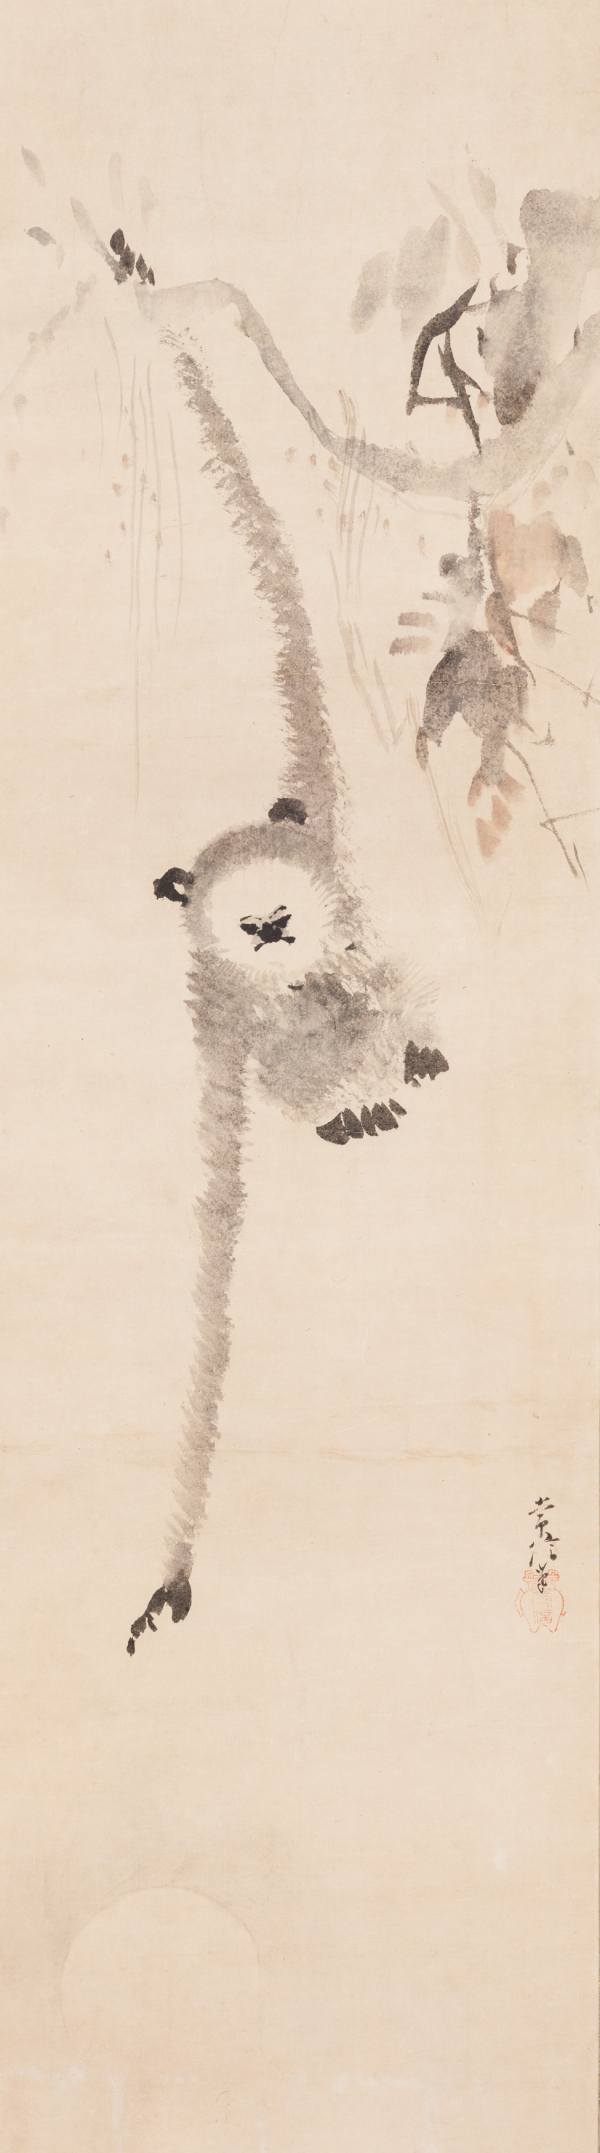 Kanō Tsunenobu, Monkey Reaching for the Moon’s Reflection in the Waves, Japan, c. 1700
